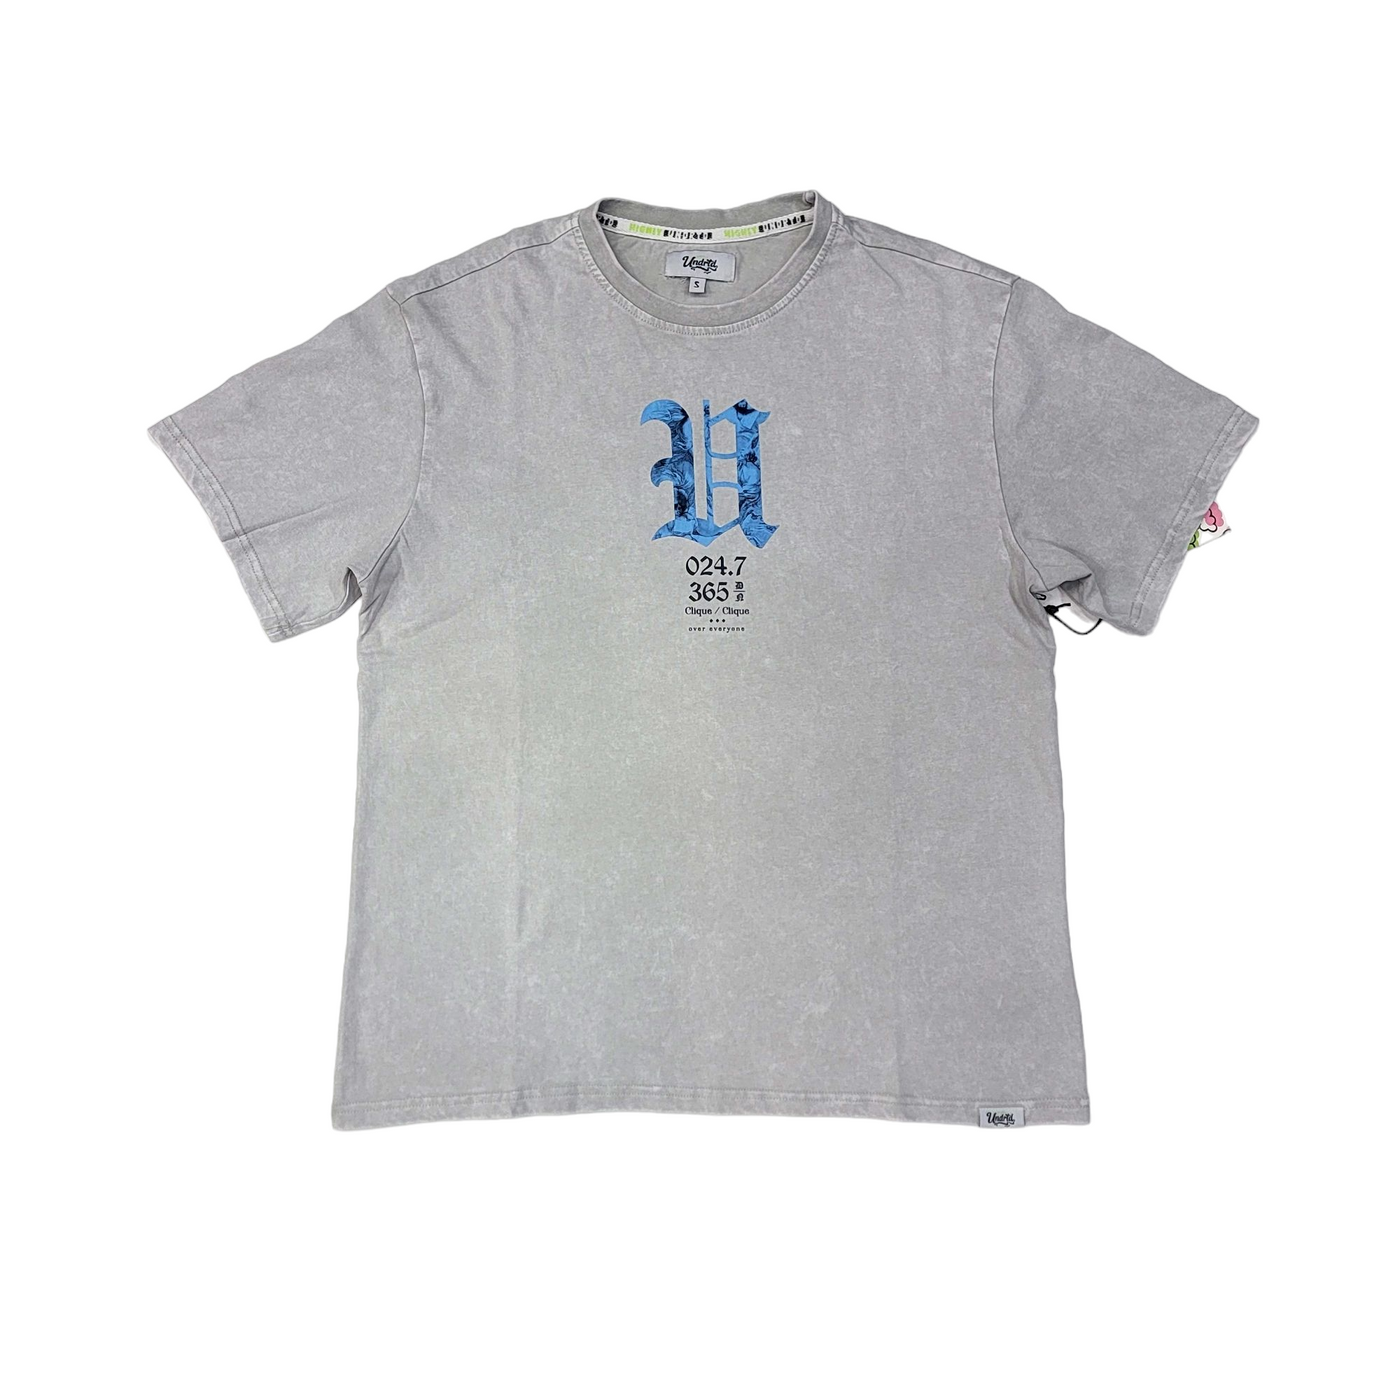 Highly Undrtd Official T-Shirt Grey Vintage Wash US4116W